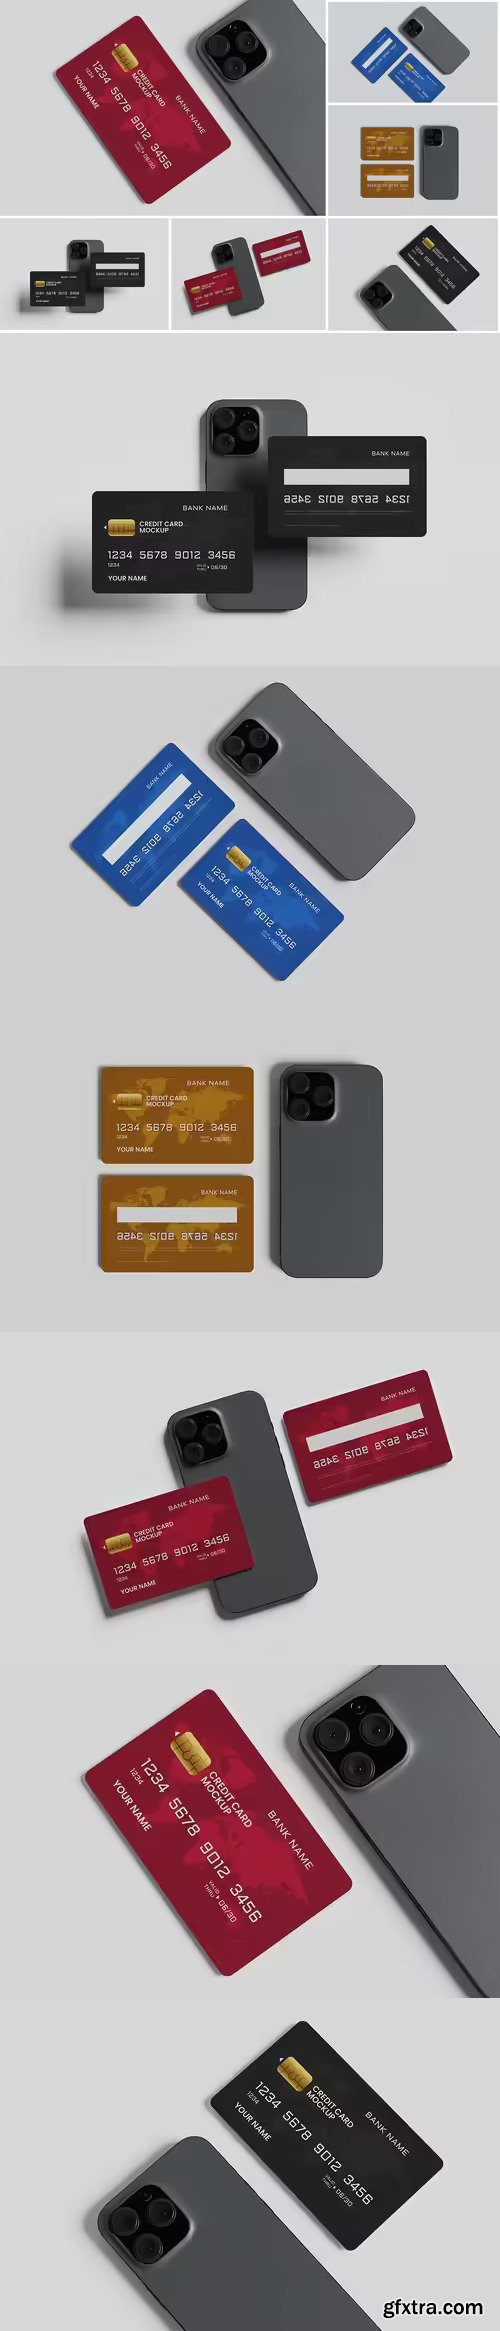 Credit Card / Debit Card Mockup